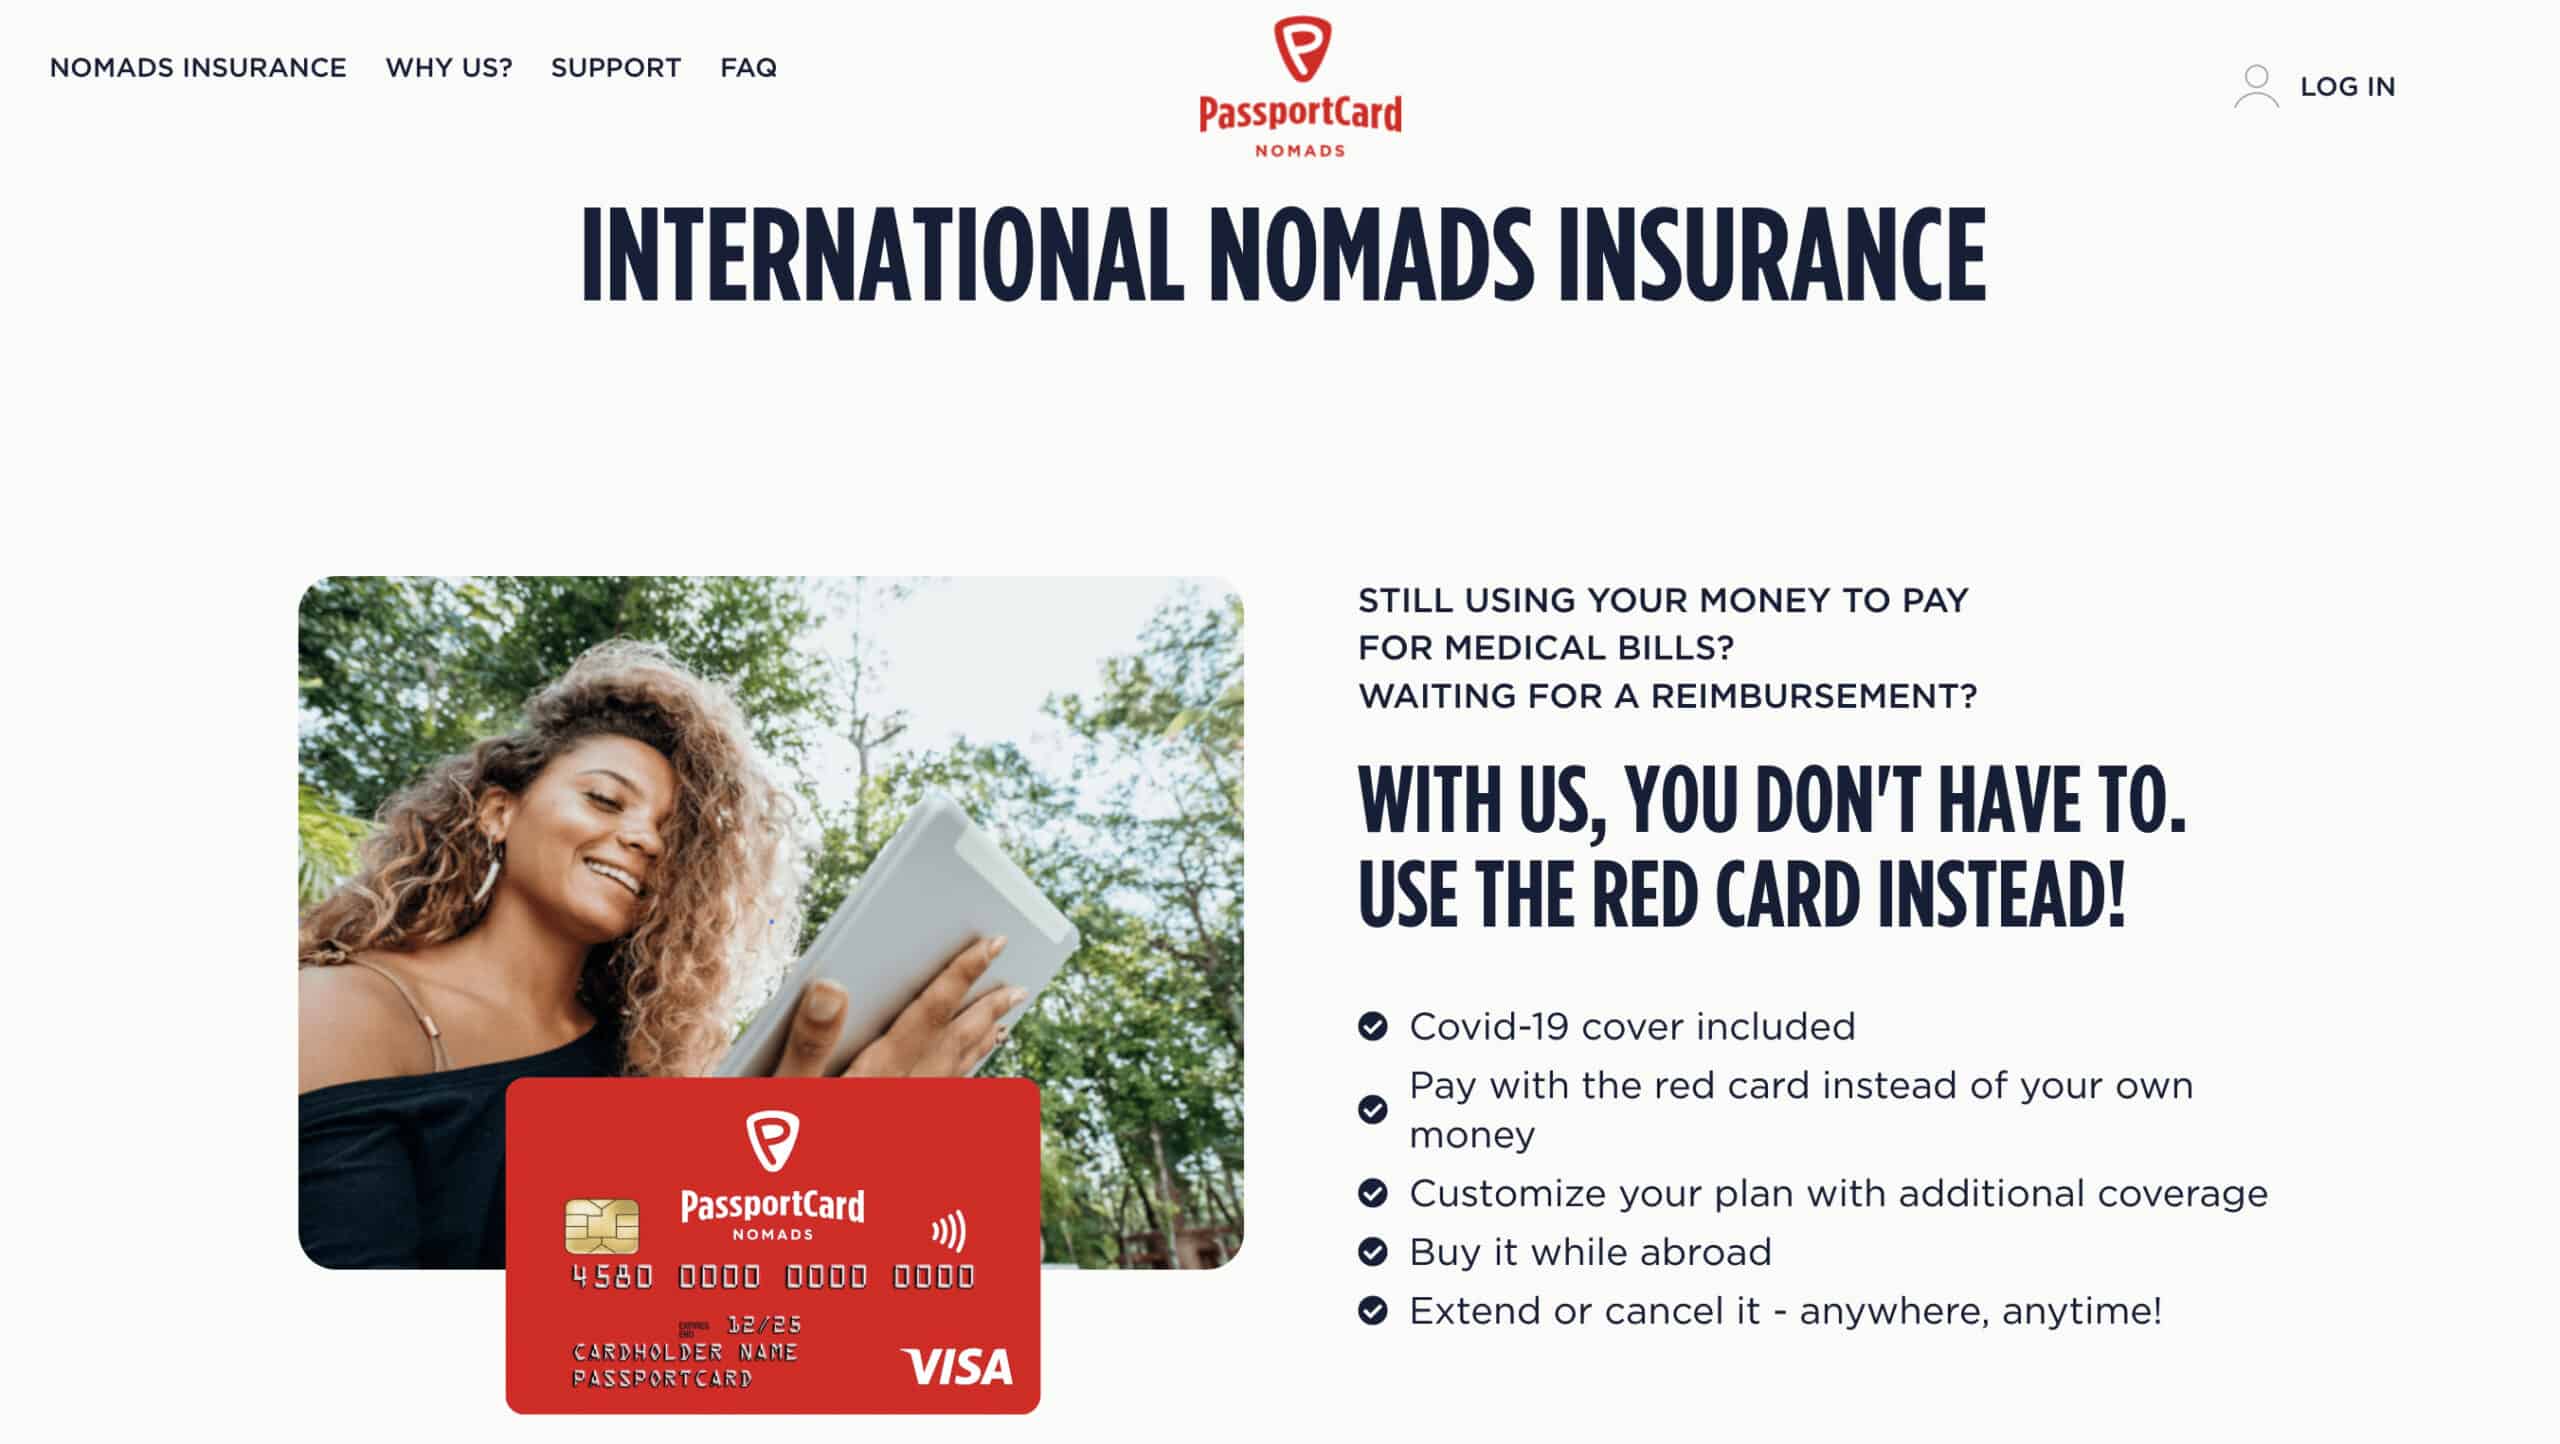 passportcard nomads remote insurance plan